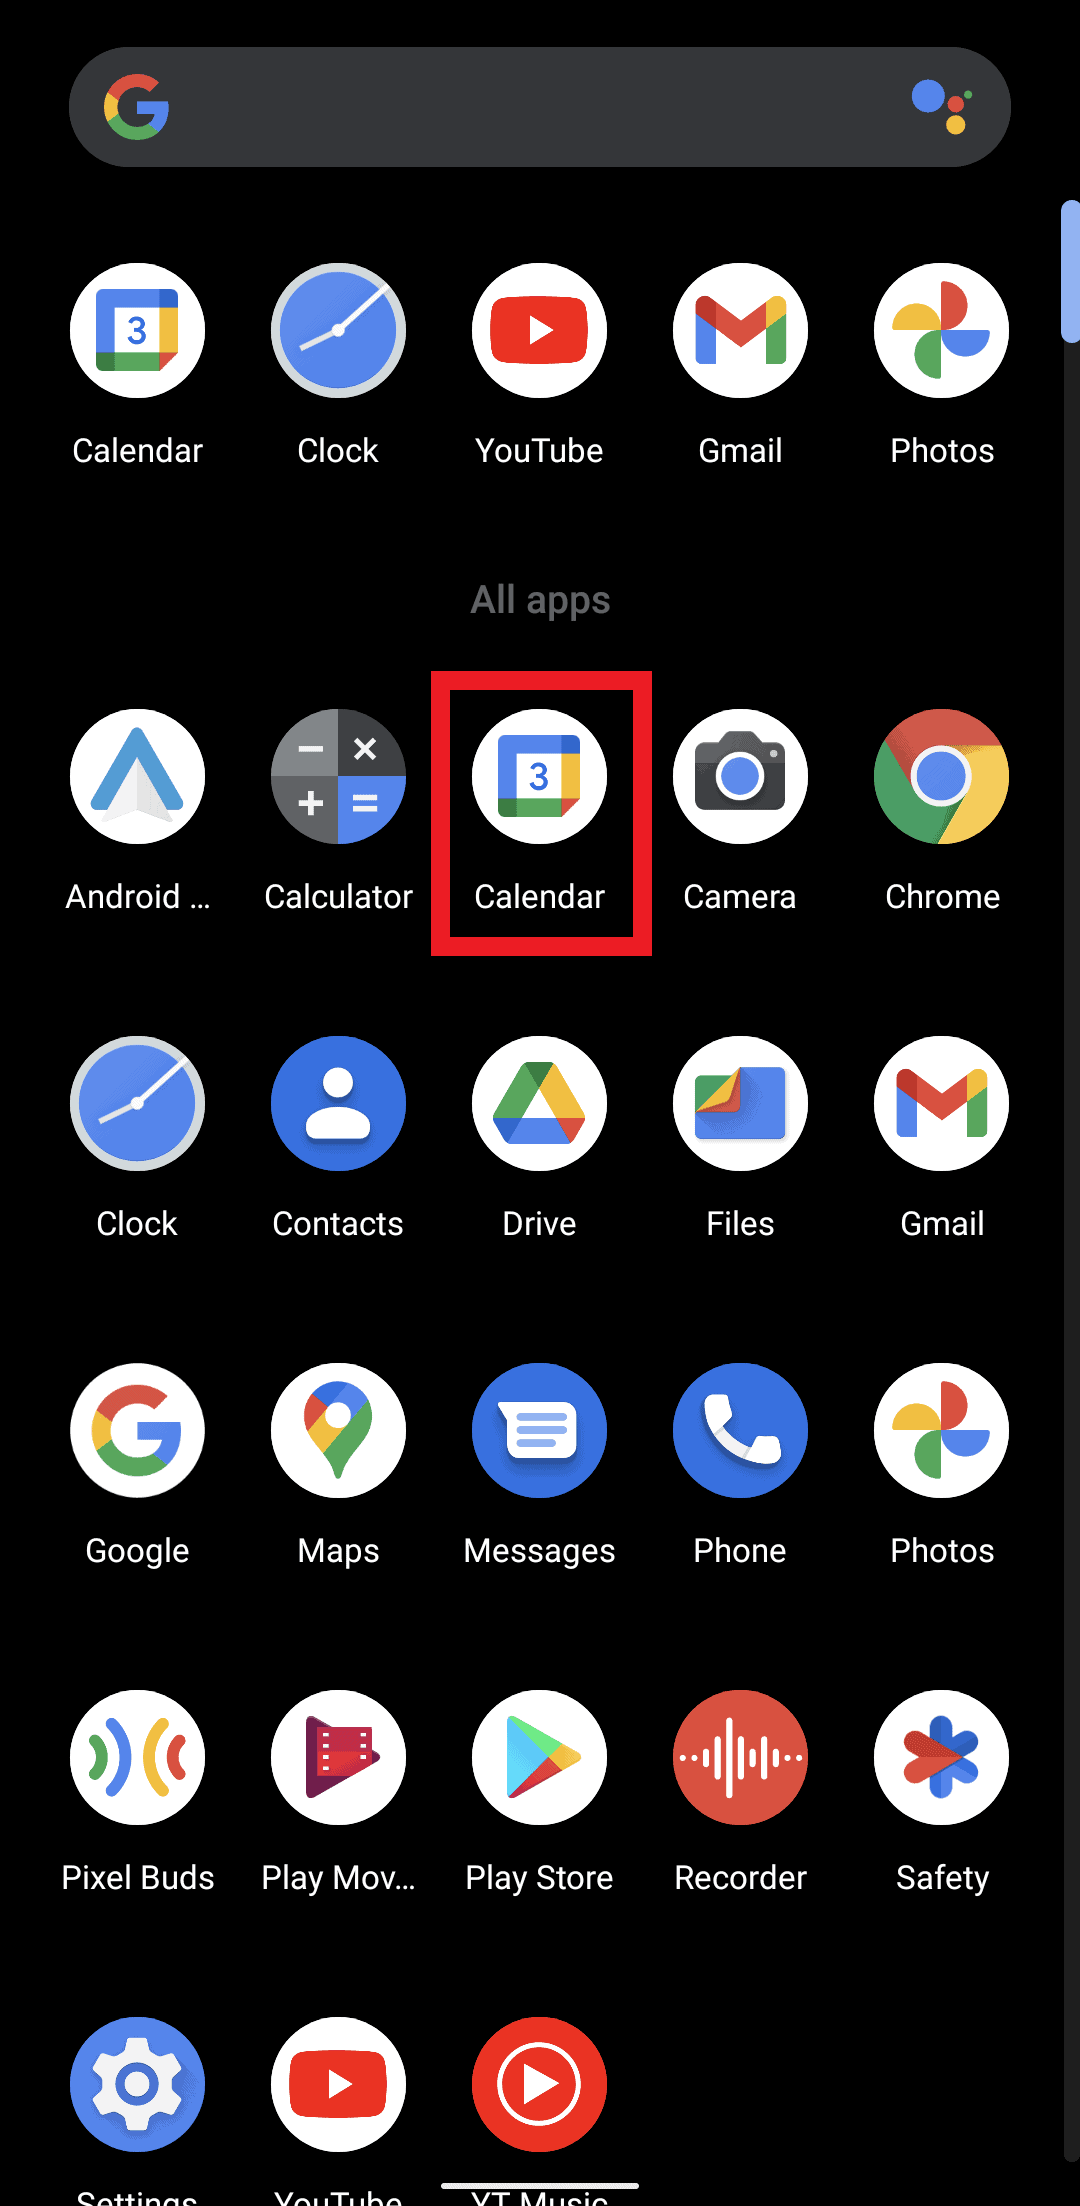 Tap the Google Calendar app